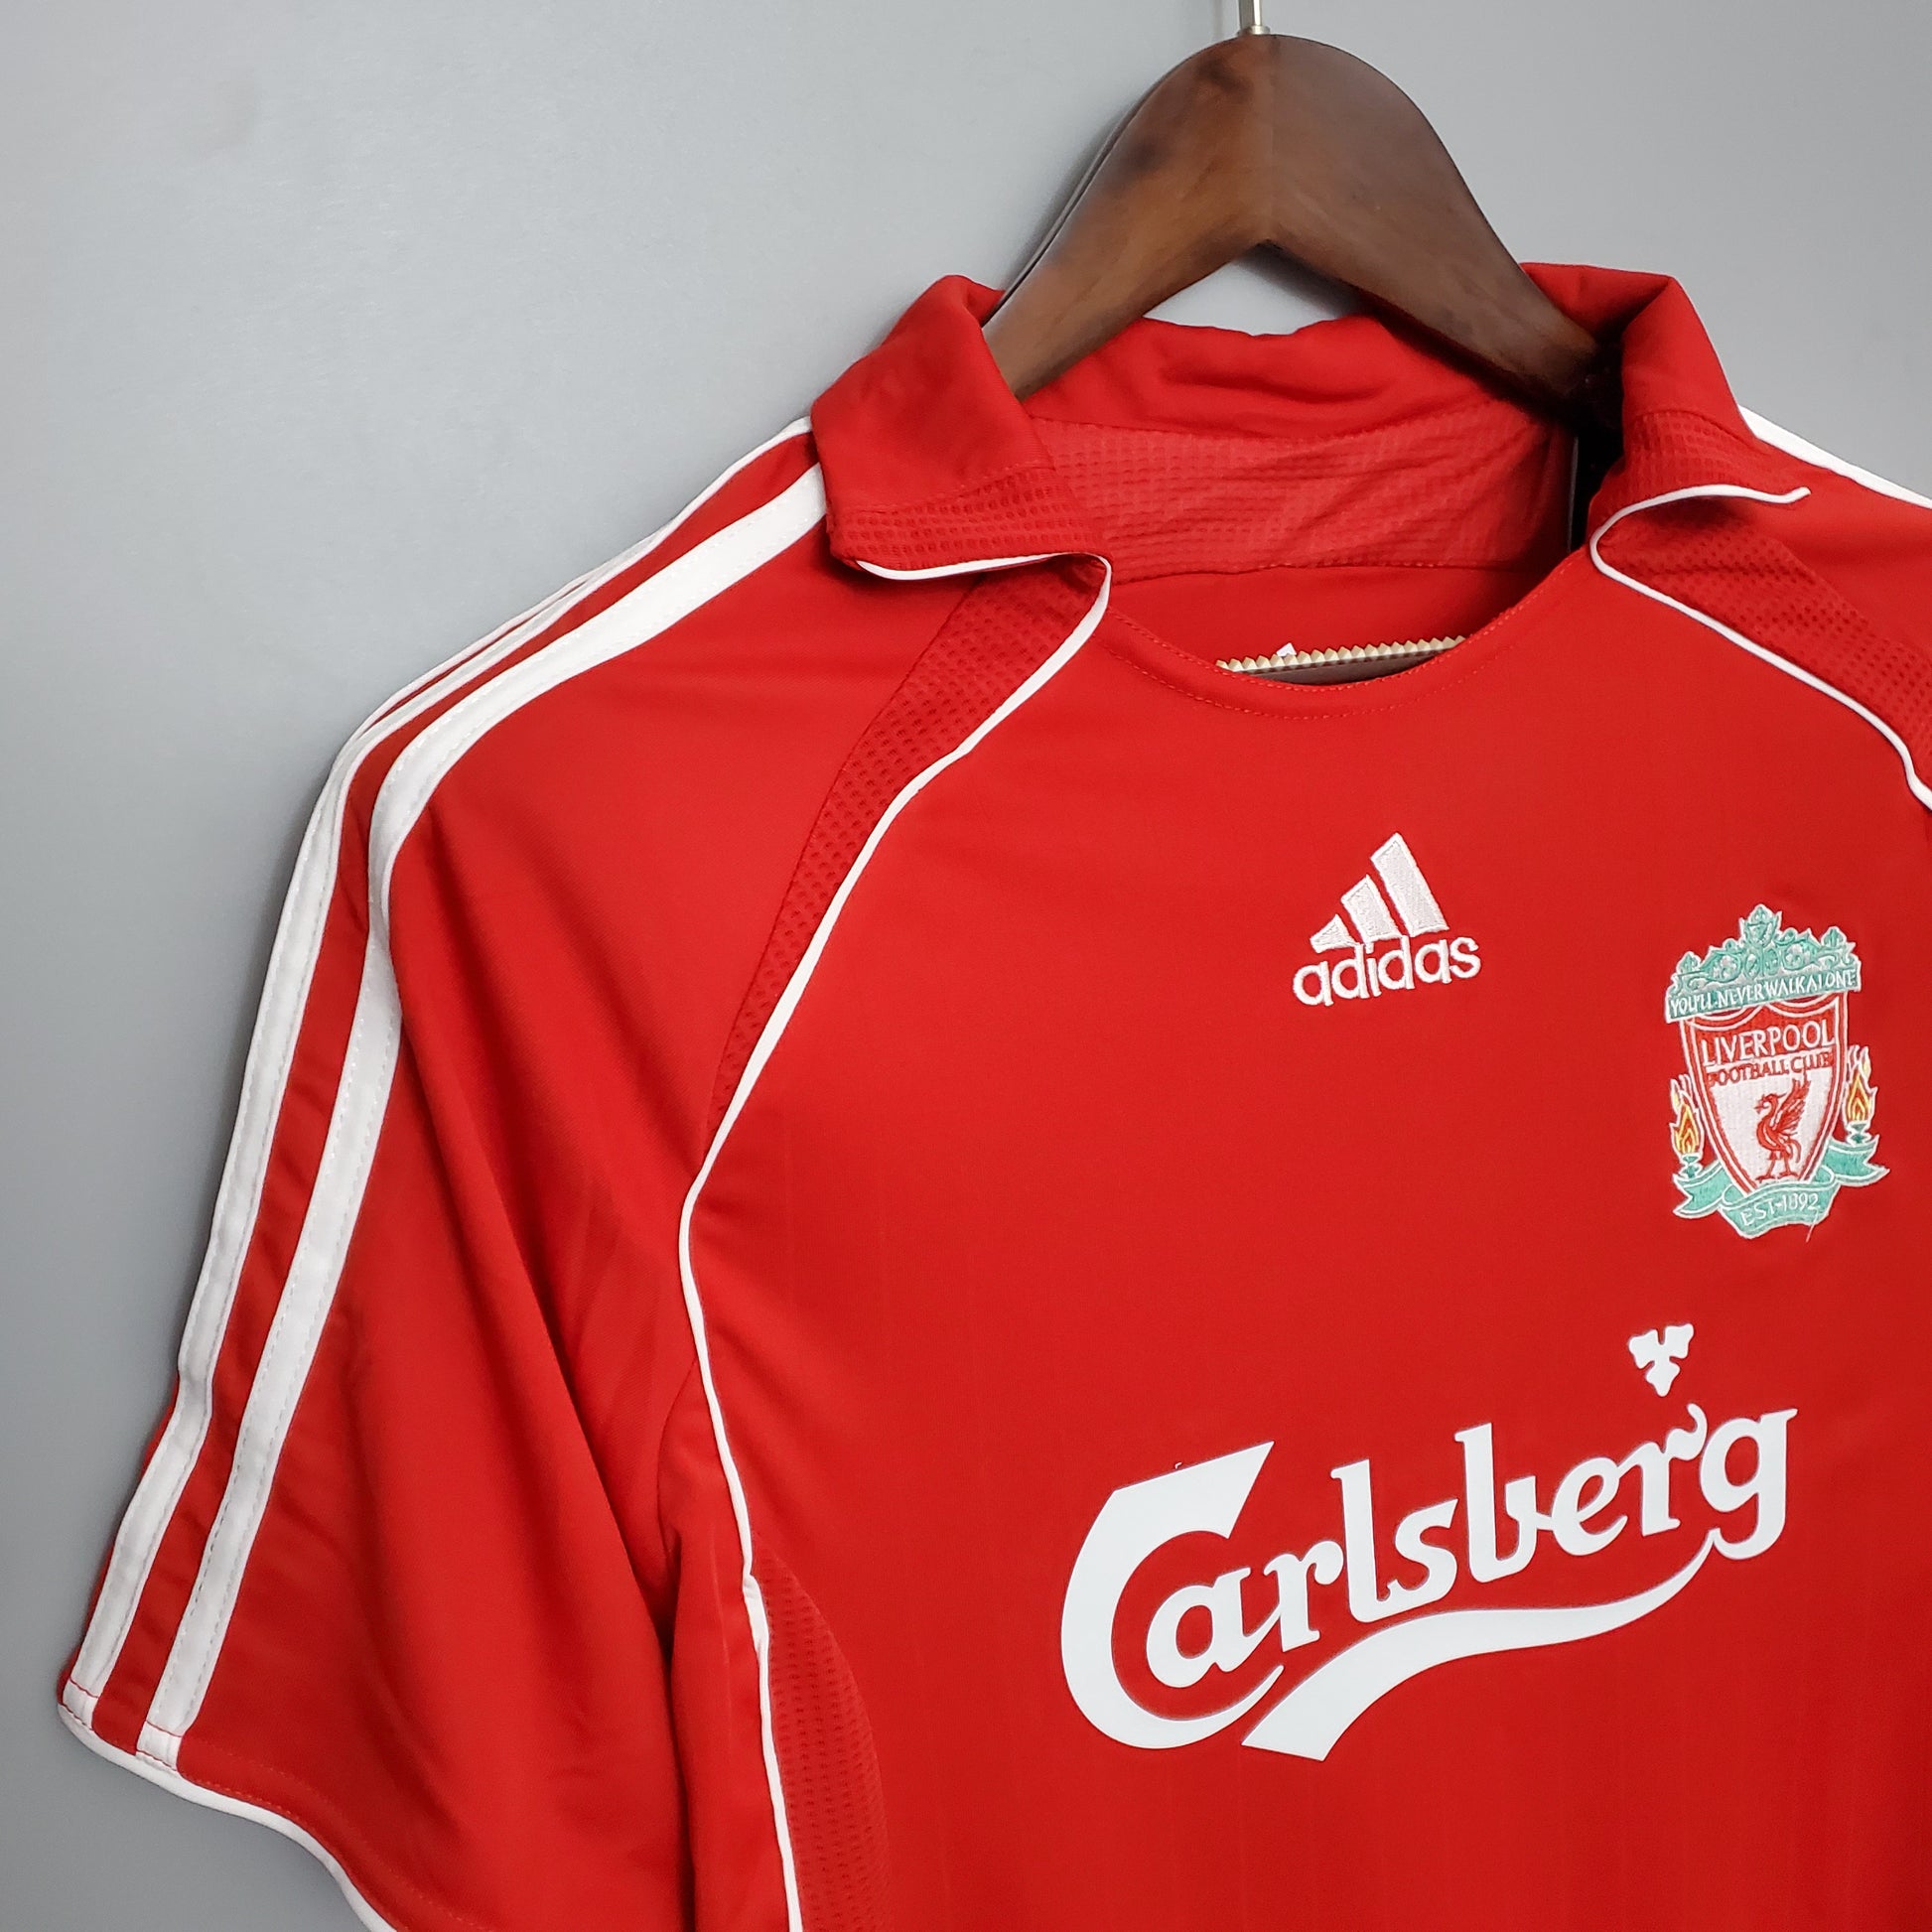 Adidas Liverpool 2006 2008 Home Soccer Jersey Football Shirt